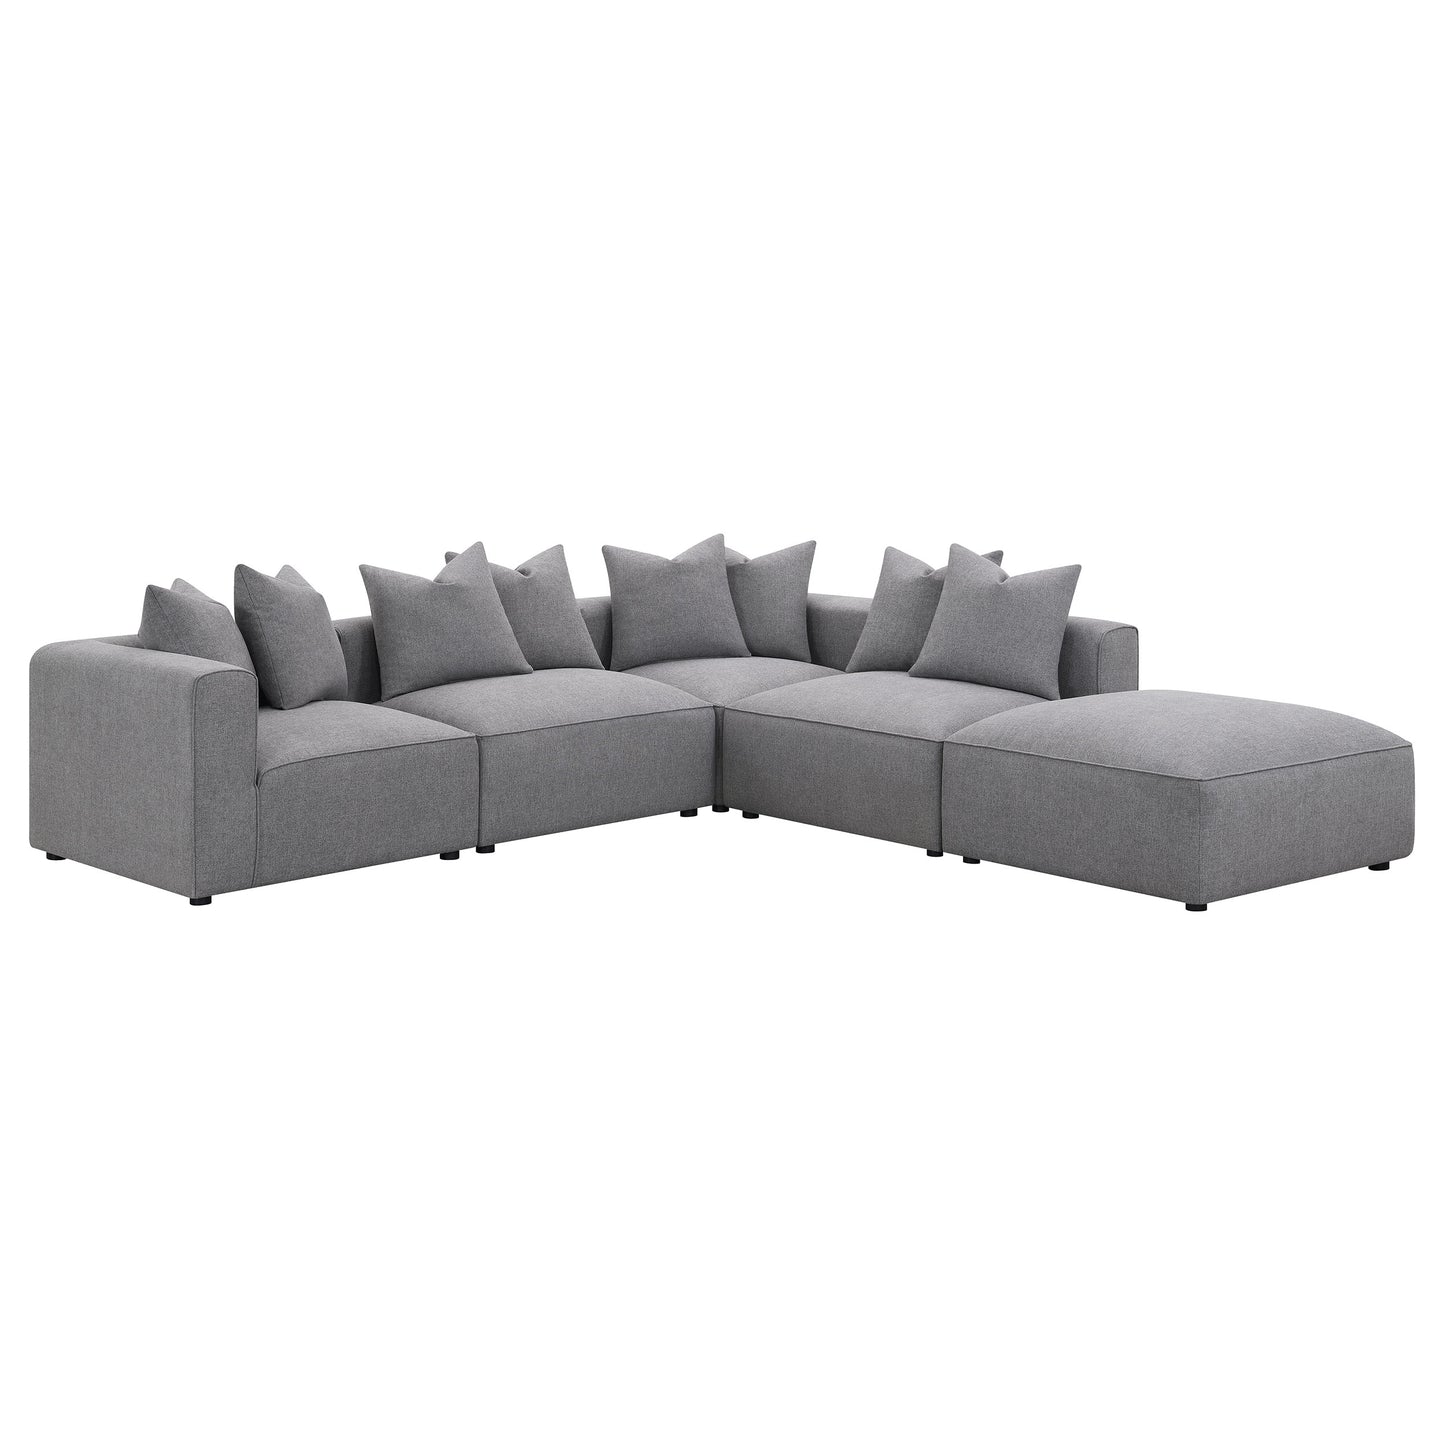 Jennifer Square Upholstered Ottoman Grey